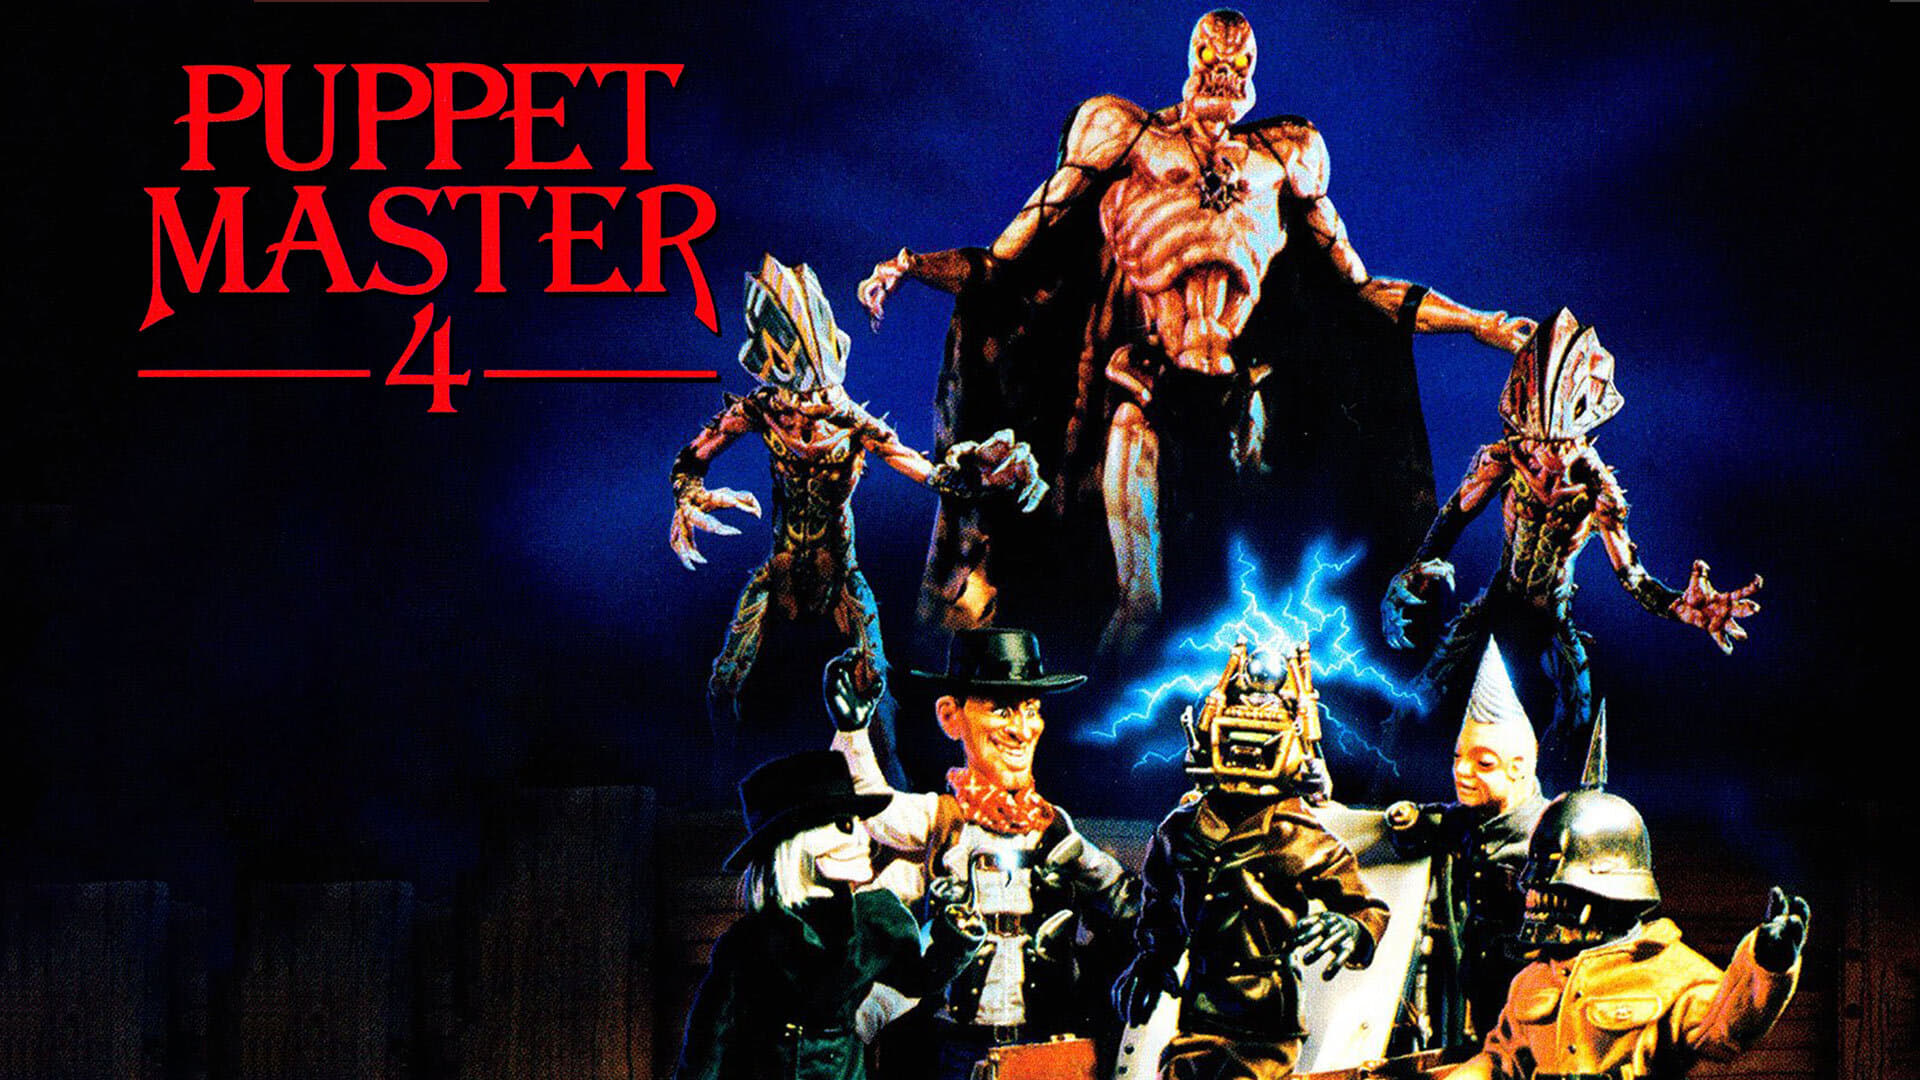 Puppet Master 4 - The Demon